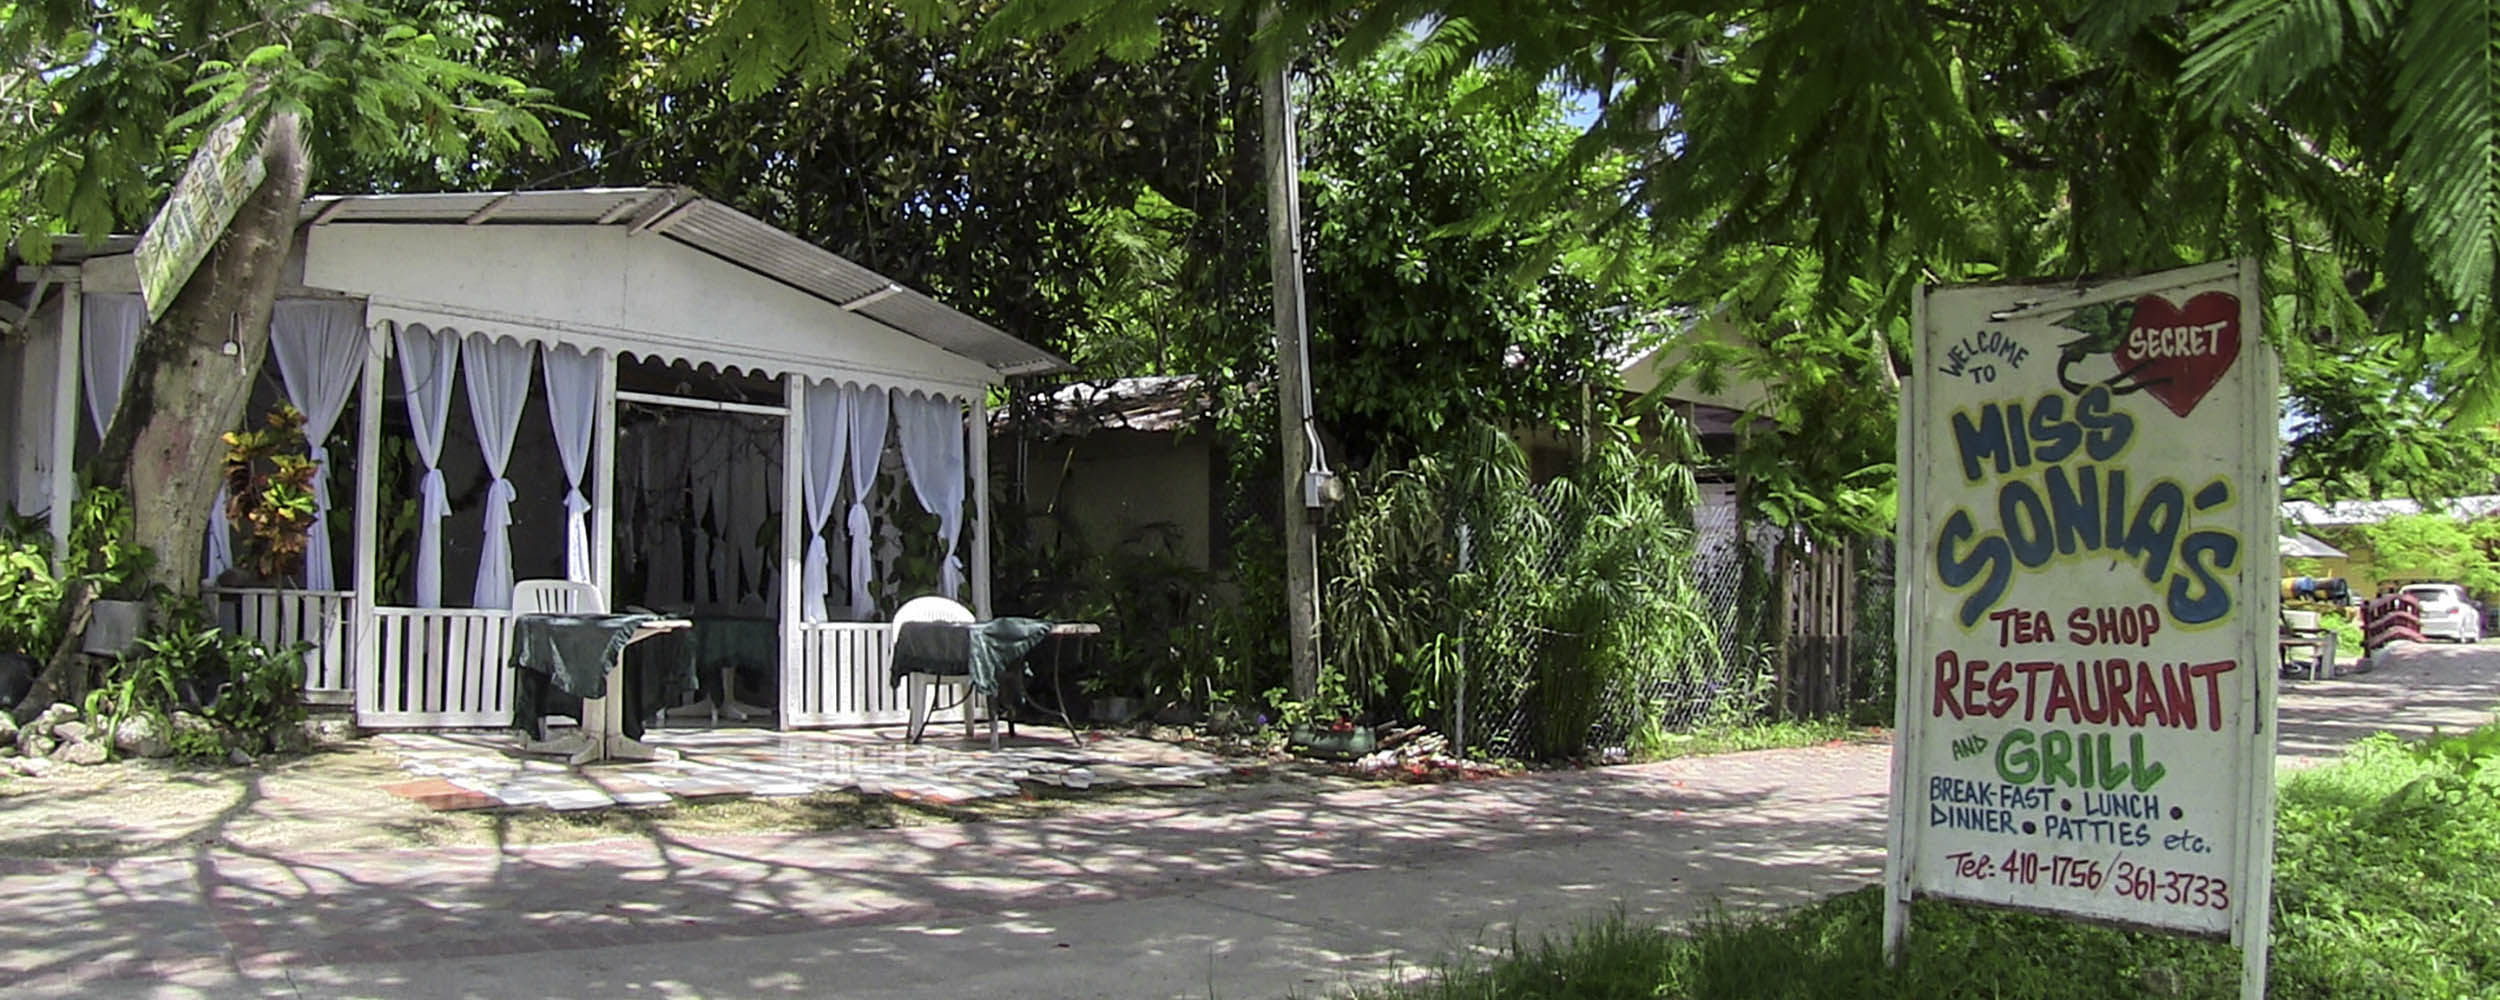 Miss Sonia's Tea Shop and Restaurant, Norman Manley Boulevard, Negril Jamaica